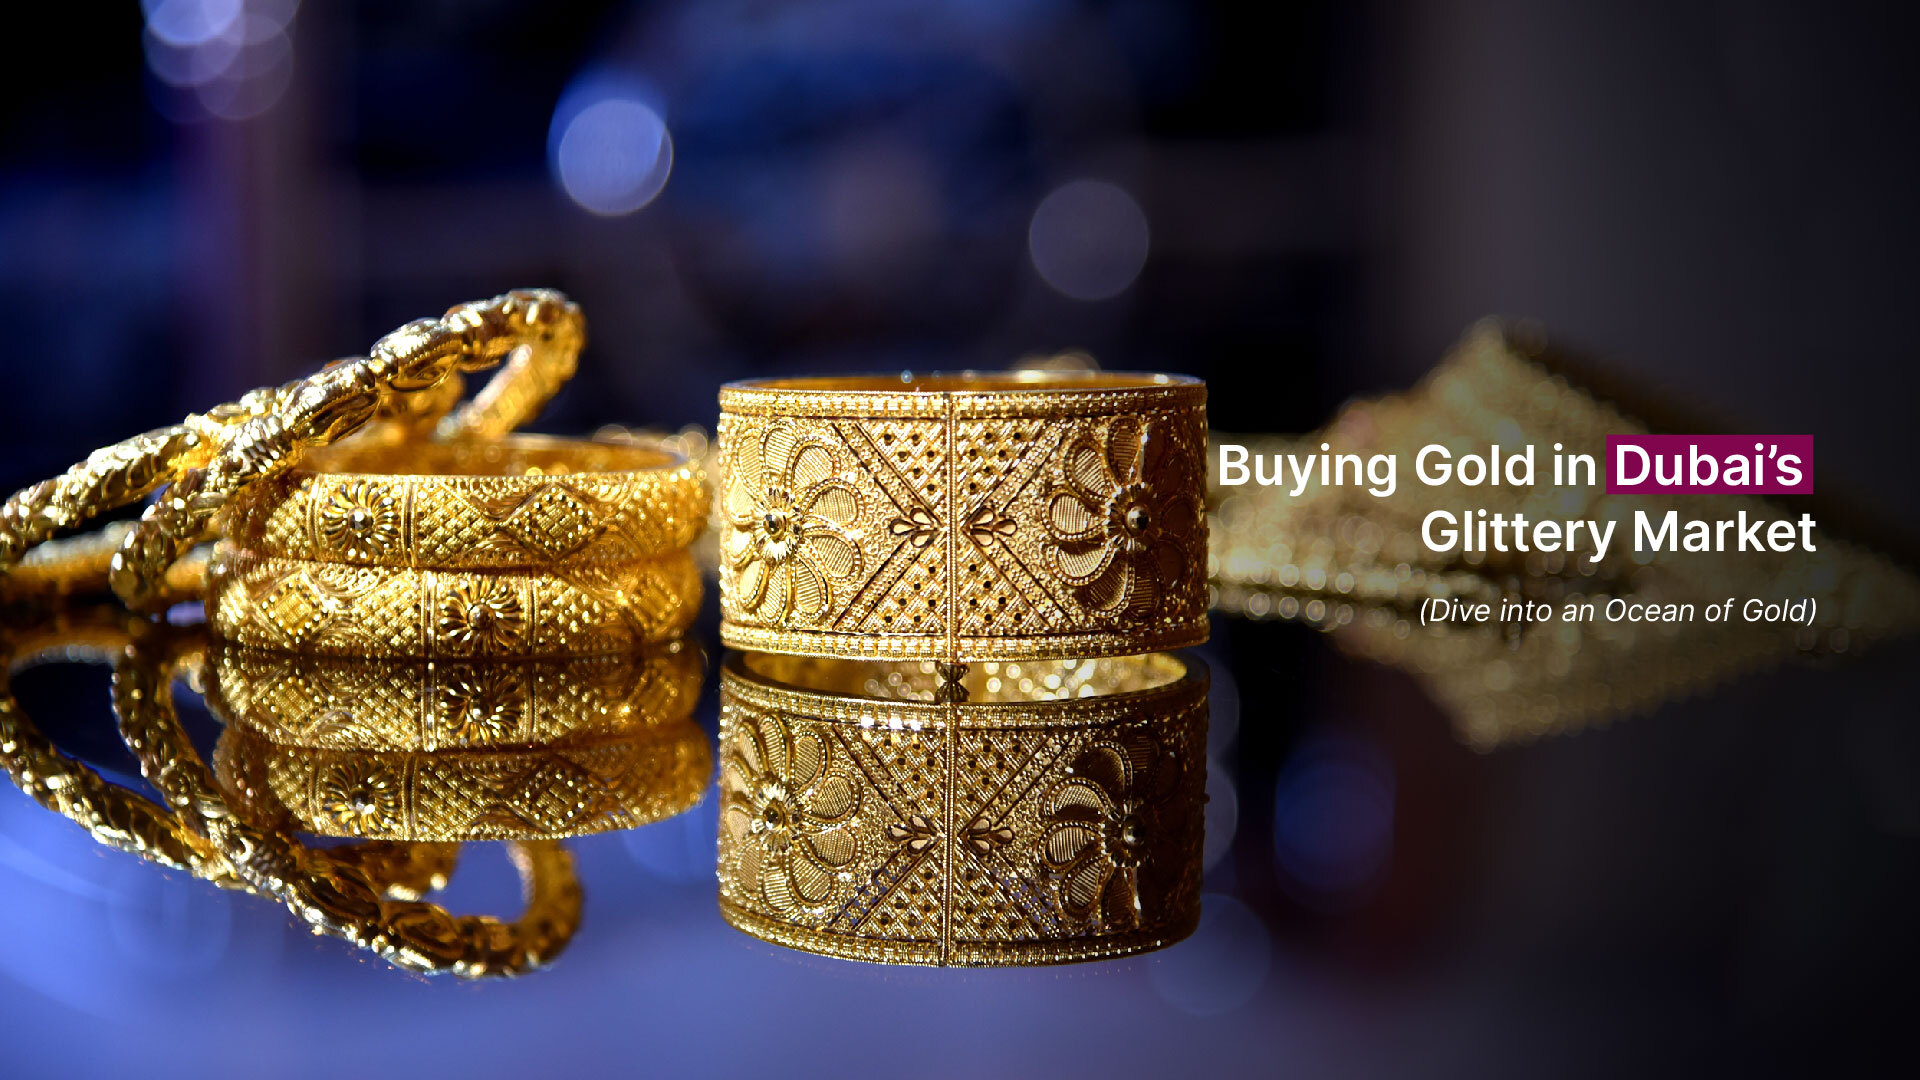 Buying Gold in Dubai’s Glittery Market